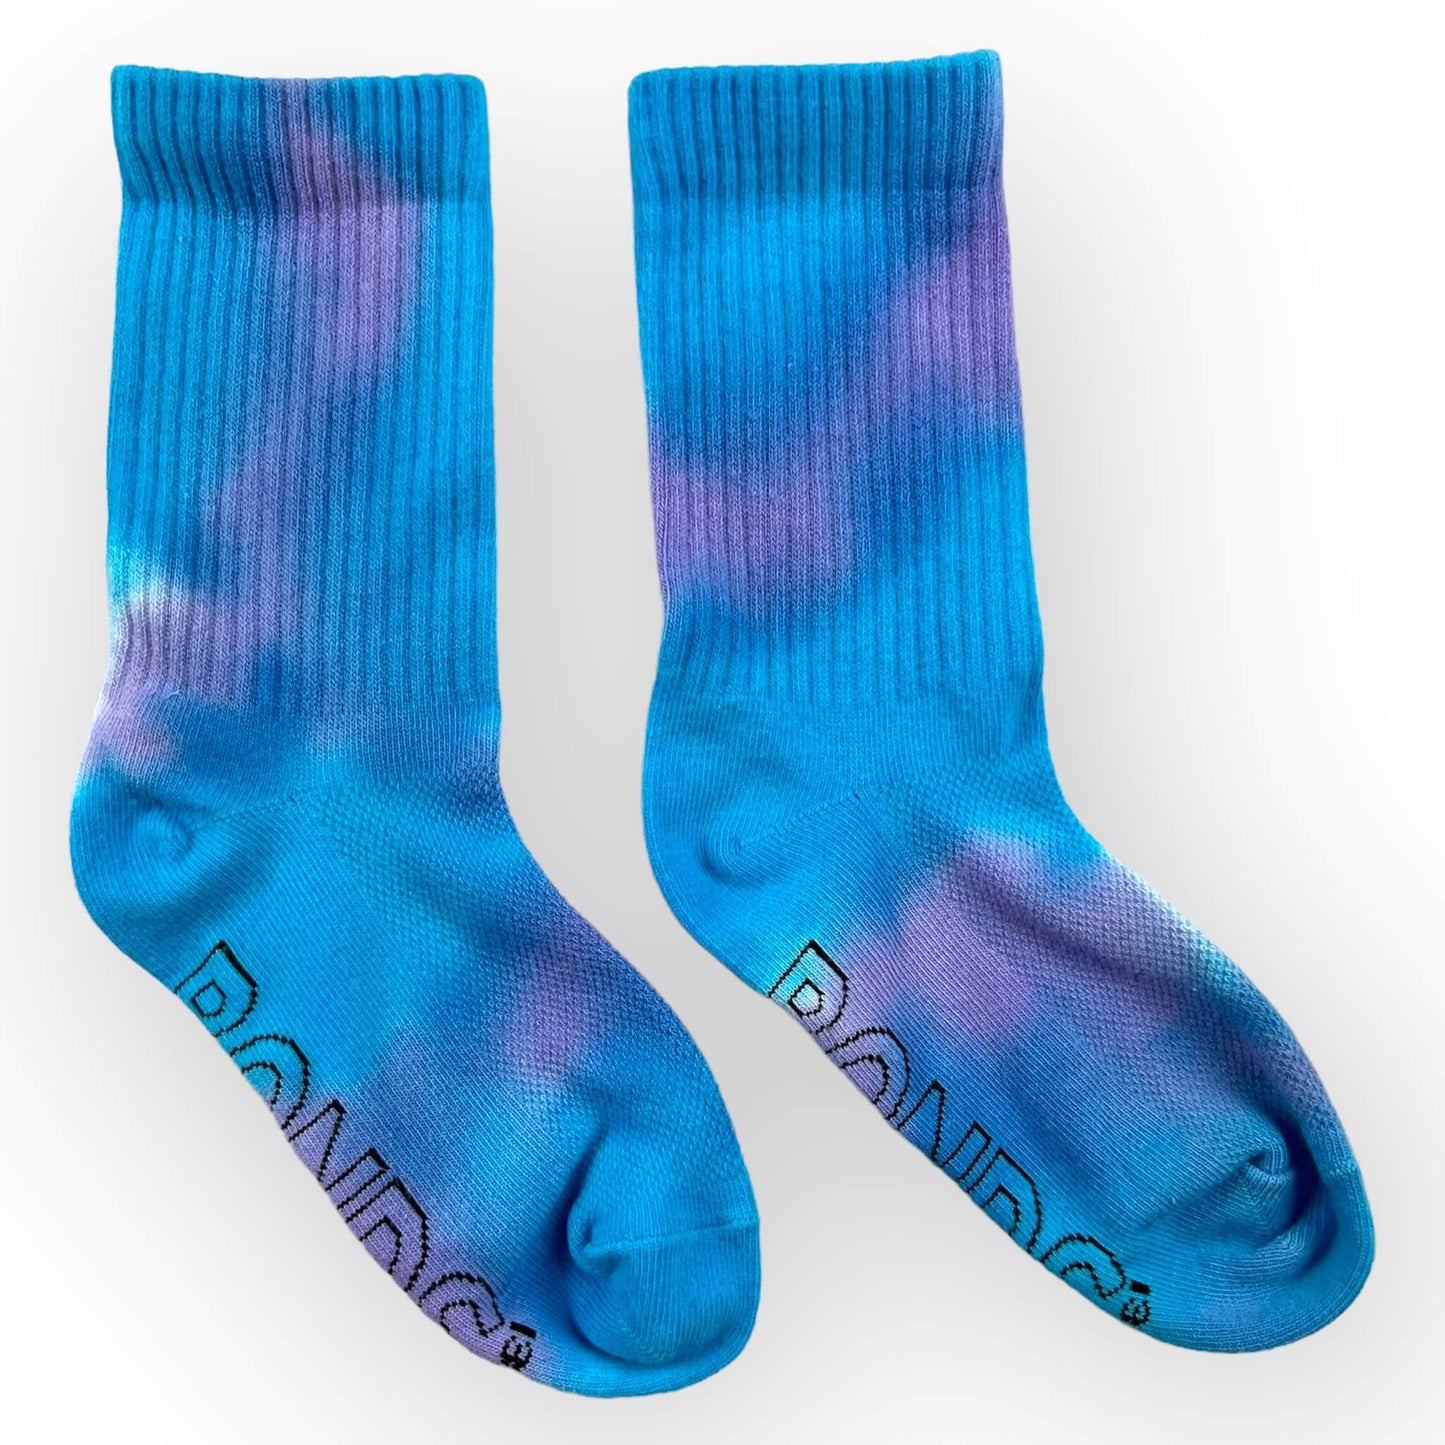 Tie Dye Socks - Size 13-3 (8-10 yrs)